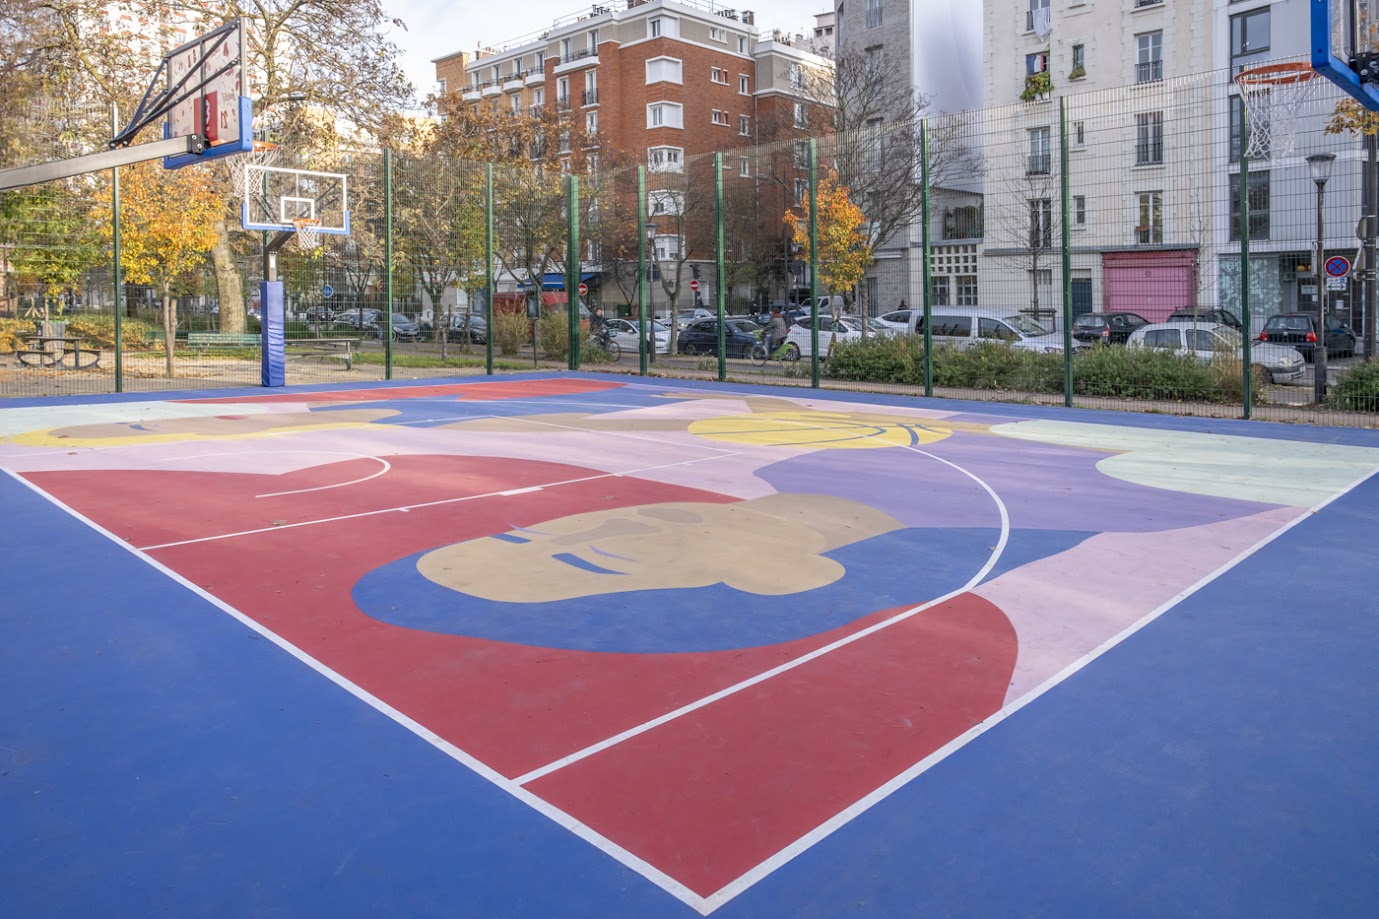 Terrain de basket du square Duchêne, 144 rue Vercingétorix (14e)